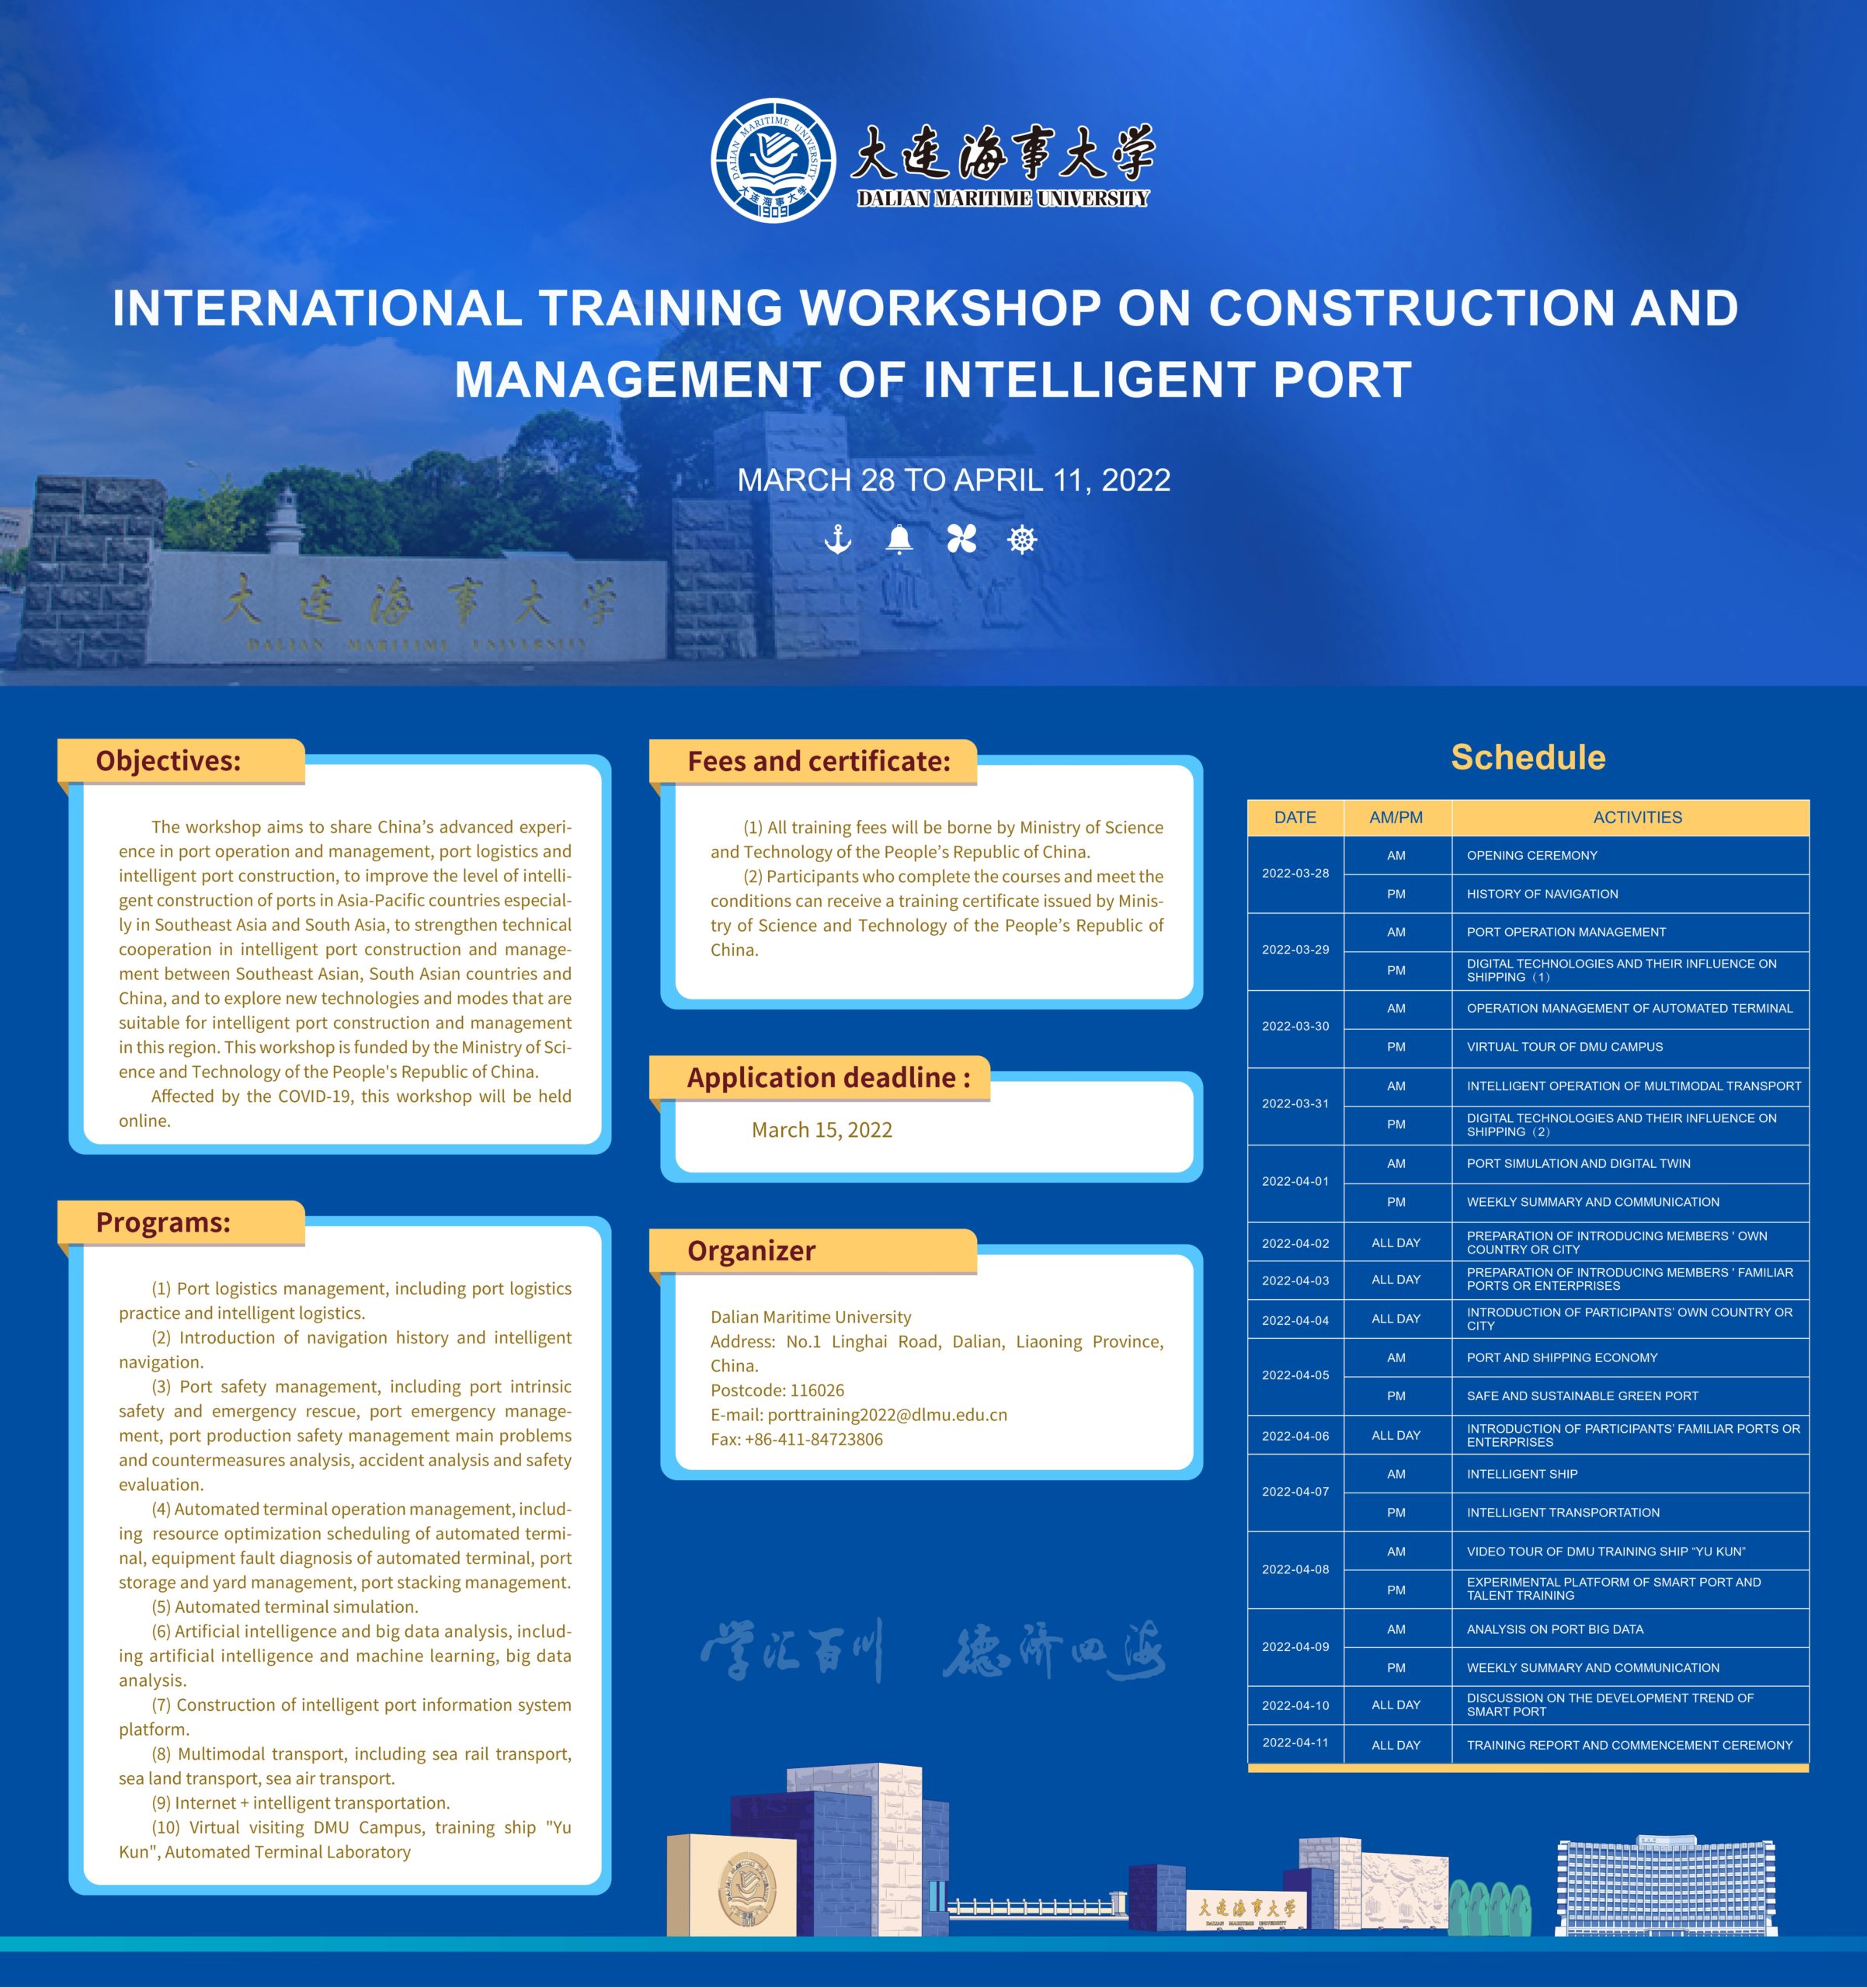 International Training Workshop on Construction and Management of Intelligent Port hosted by Dalian Maritime University (DMU)